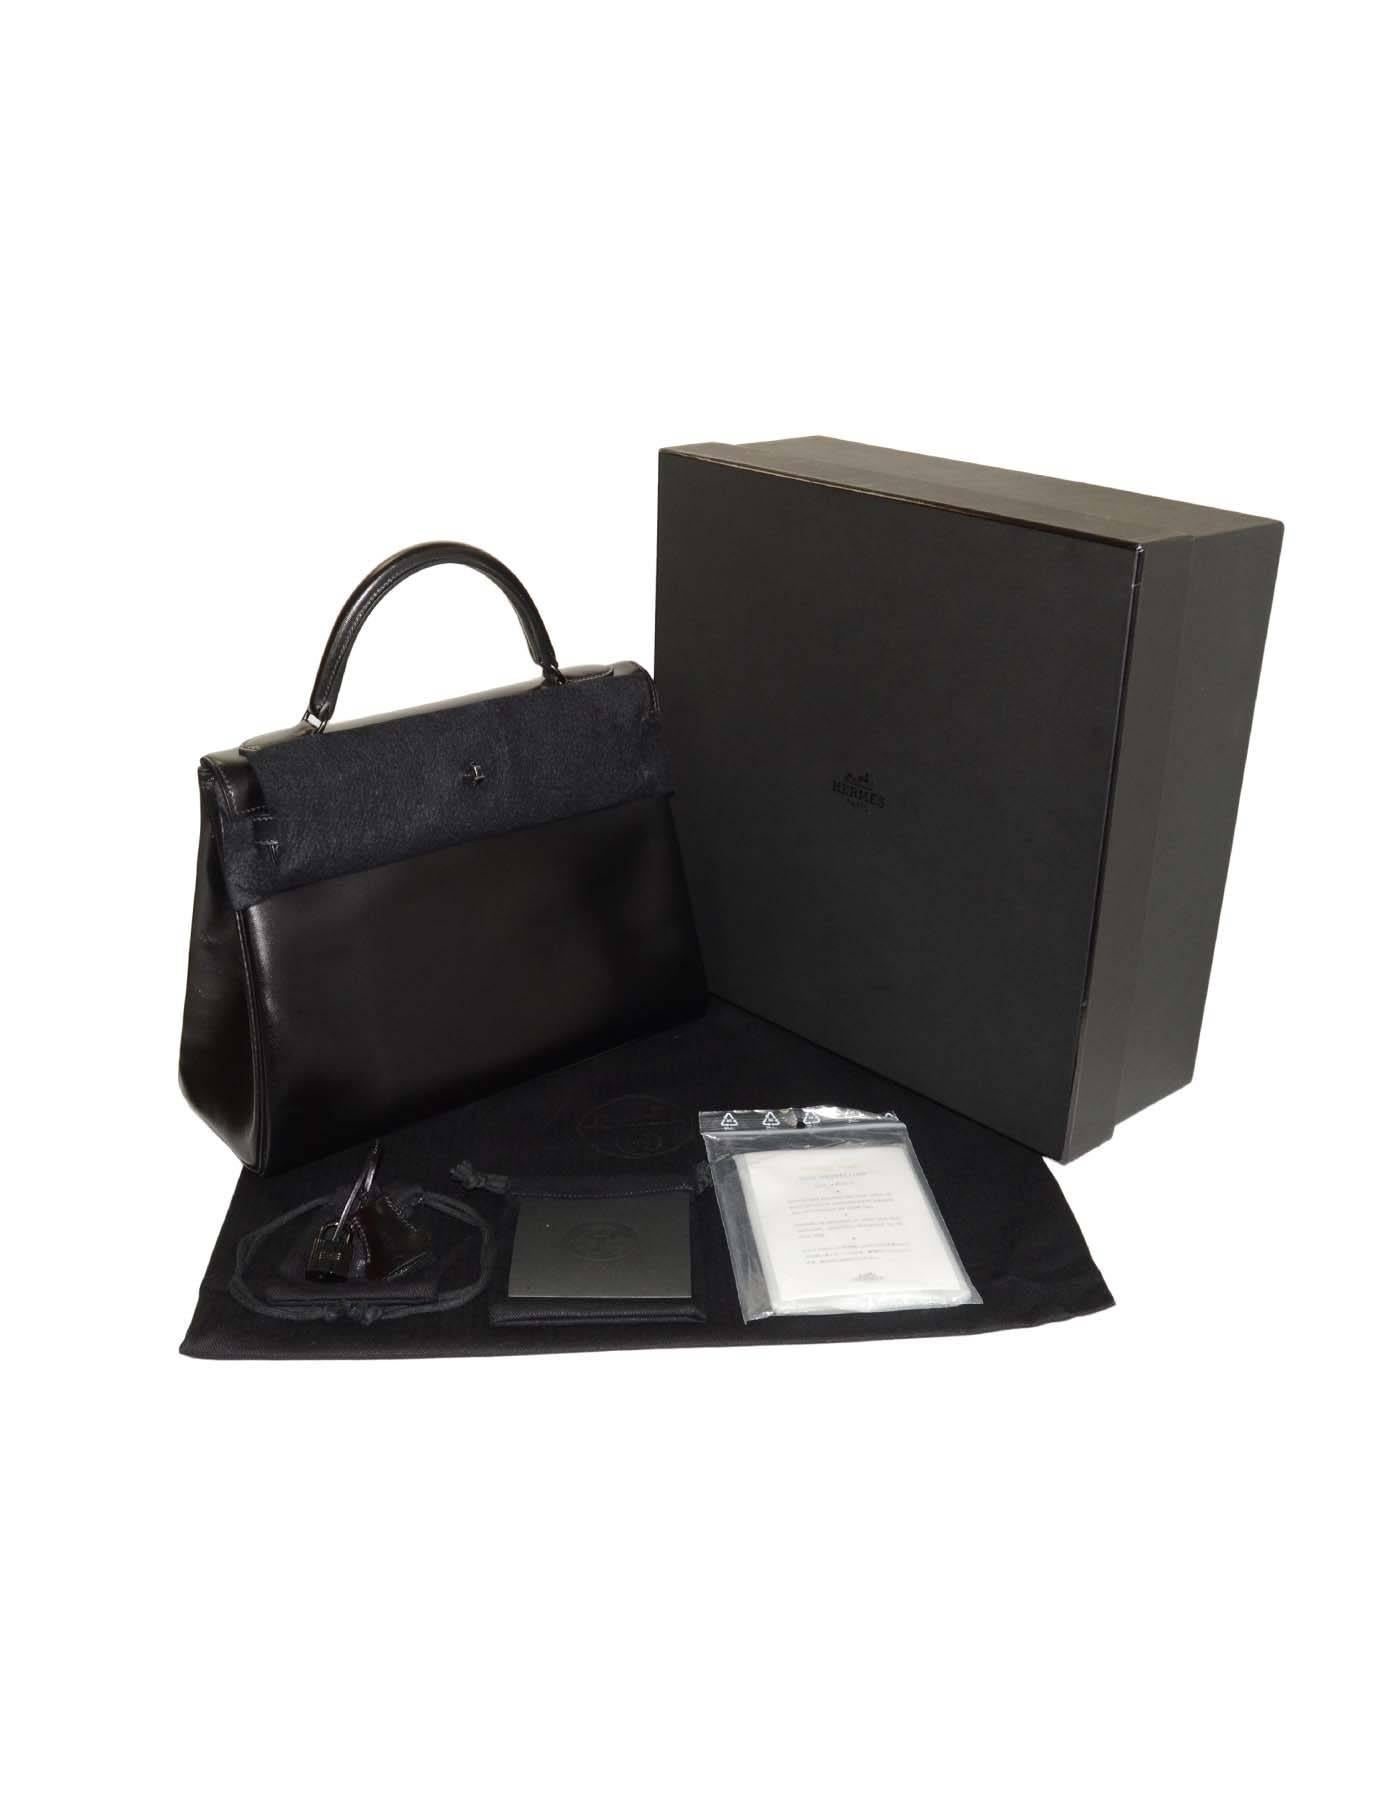 Hermes Ltd Ed. Rare 'SO BLACK' Box Leather 32cm Kelly Bag  2